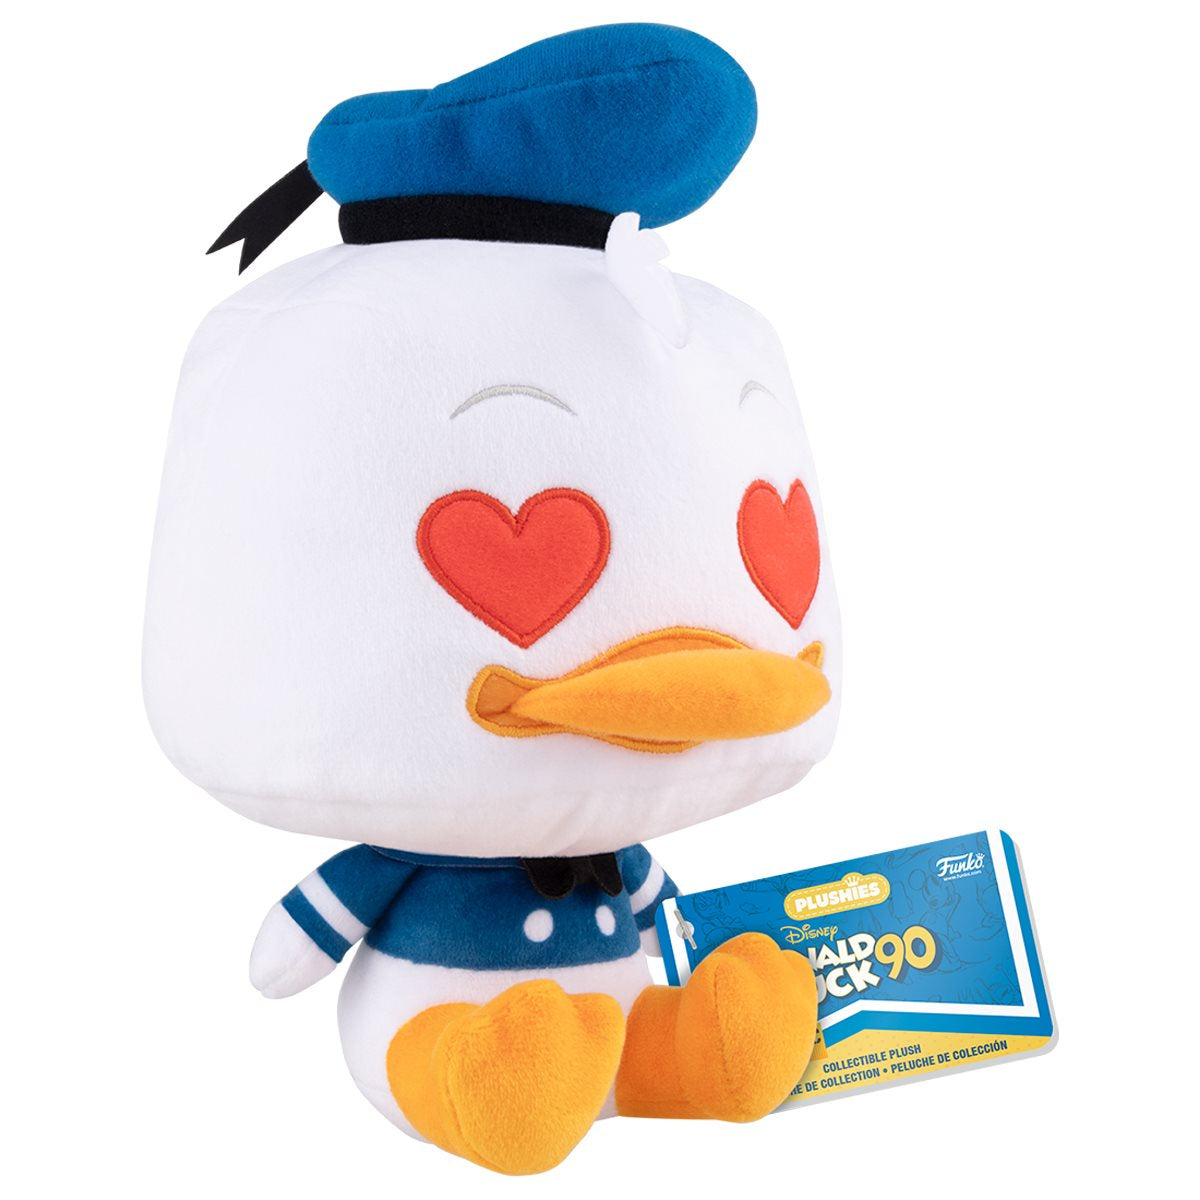 Funko Disney Donald Duck 90th Anniversary Donald Duck with Heart Eyes 7-Inch Plush